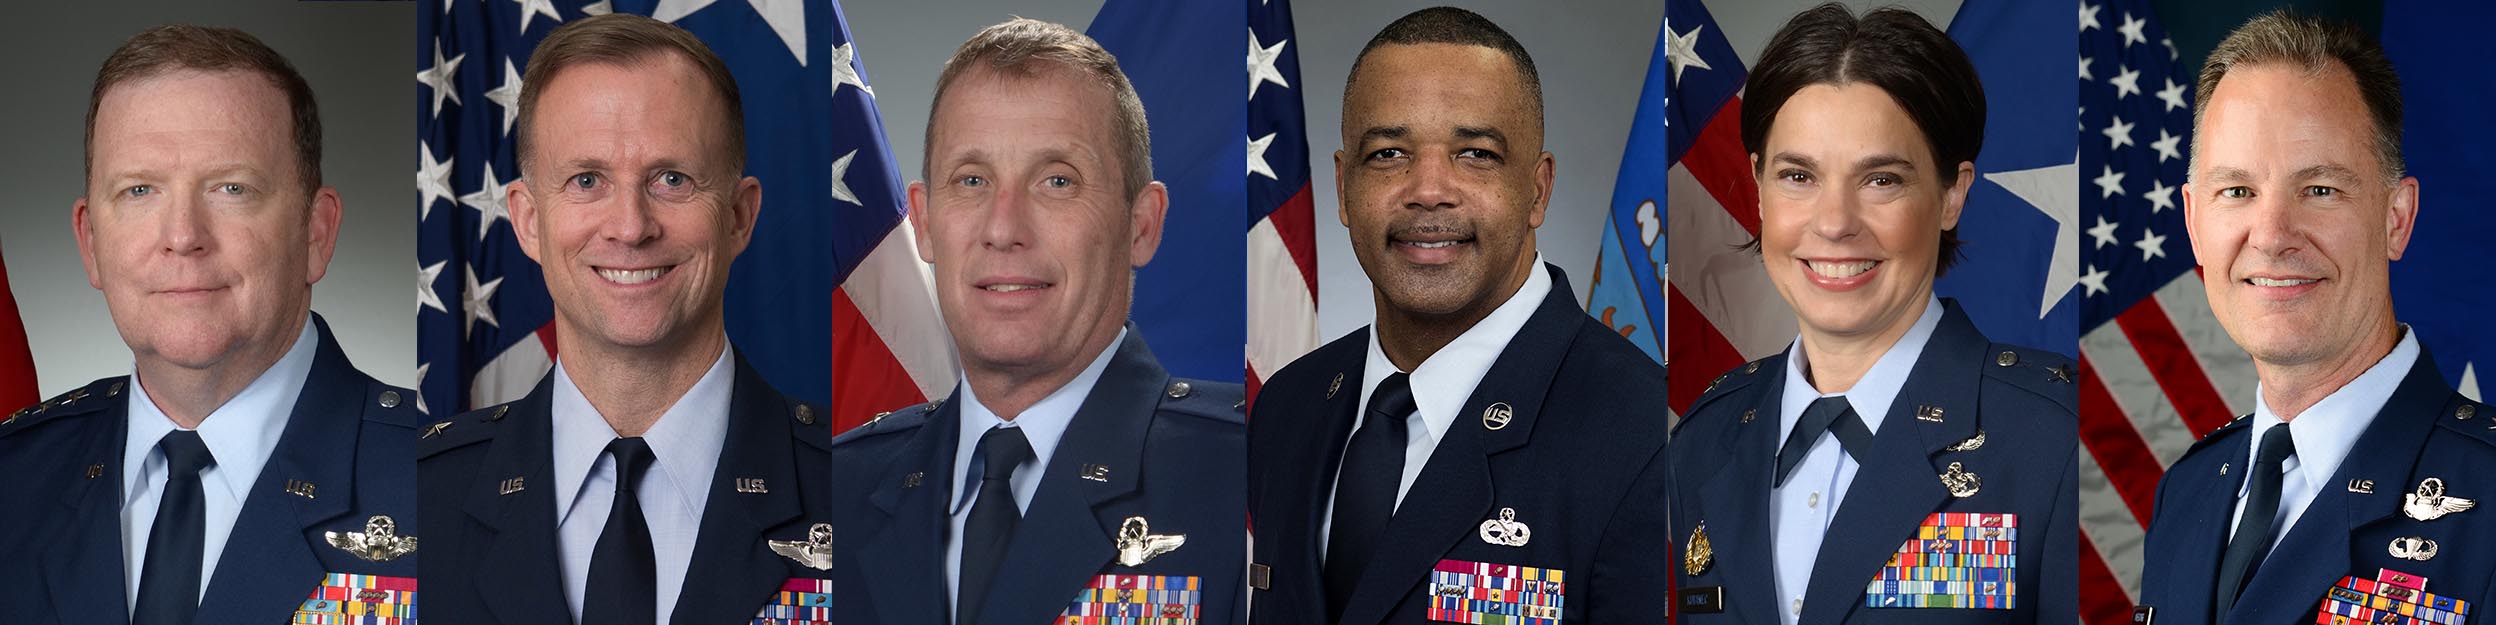 Air Force Reserve Command Senior Leadership